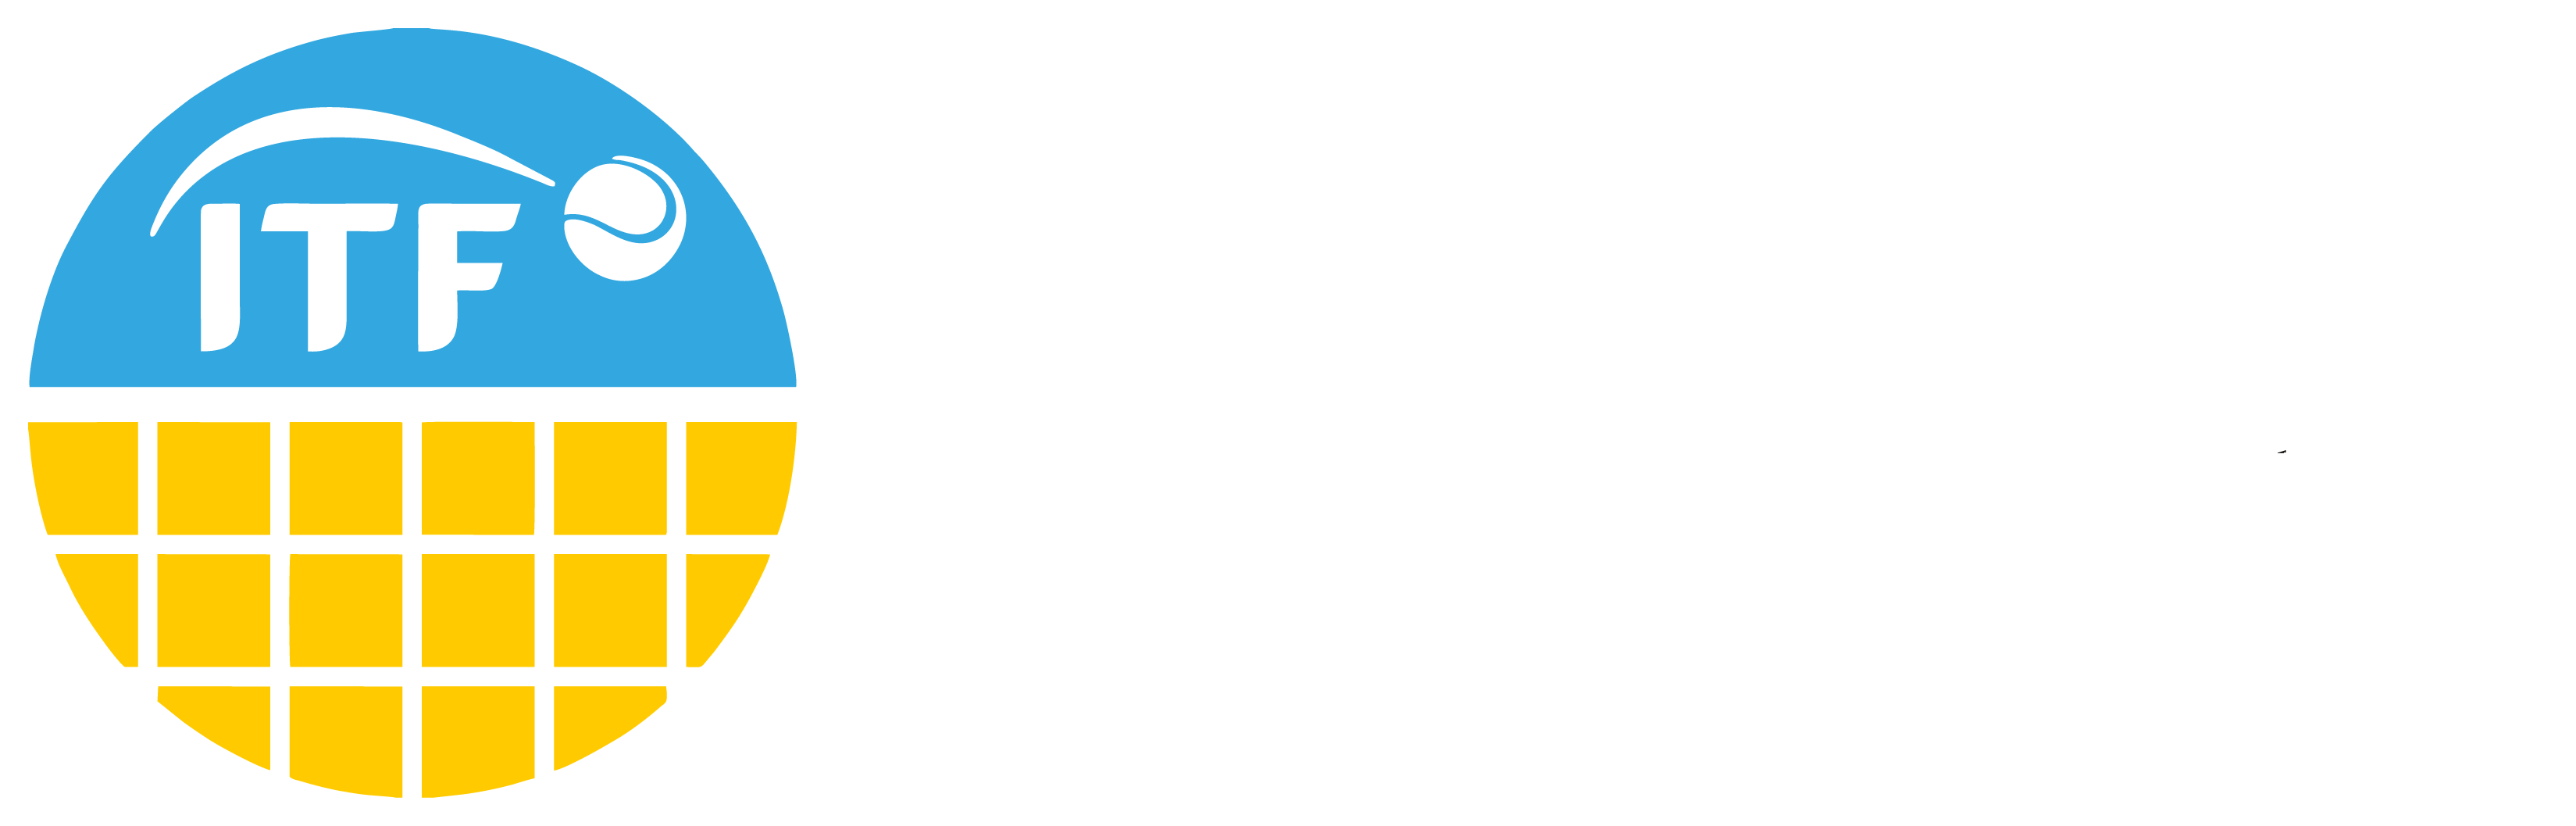 Beach Tennis World Championships - Beach Tennis (3298x1057), Png Download